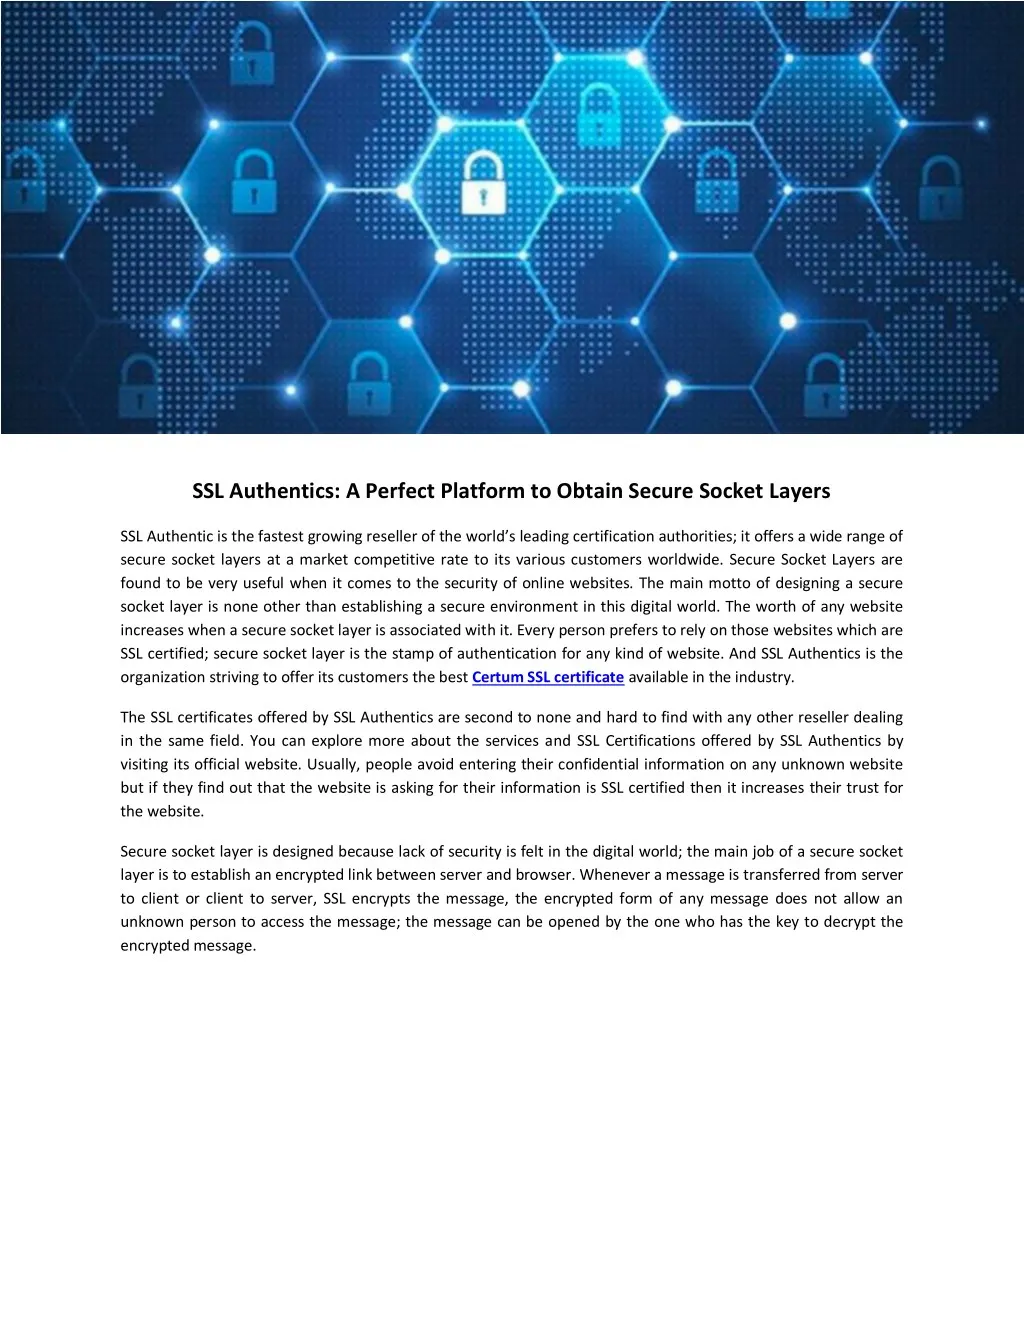 ssl authentics a perfect platform to obtain